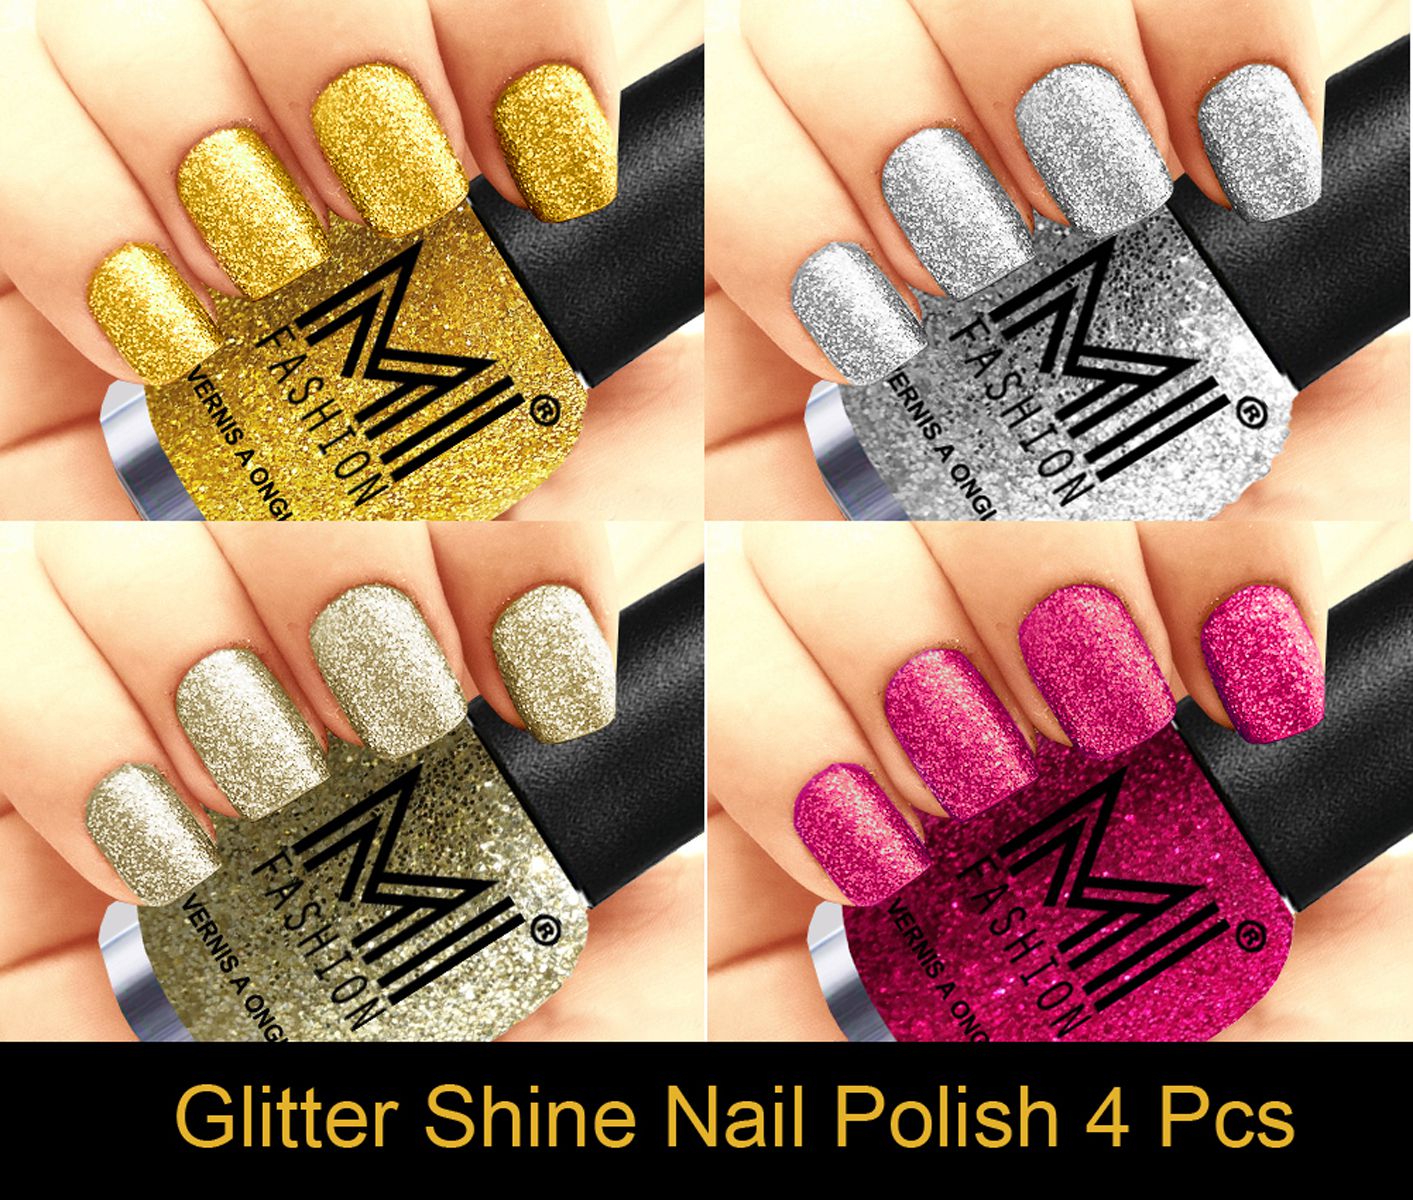 MI FASHION Long Lasting Professional Glitter Nail Polish Golden,Silver,Silver Gold,Magenta Glitter Pack of 4 mL